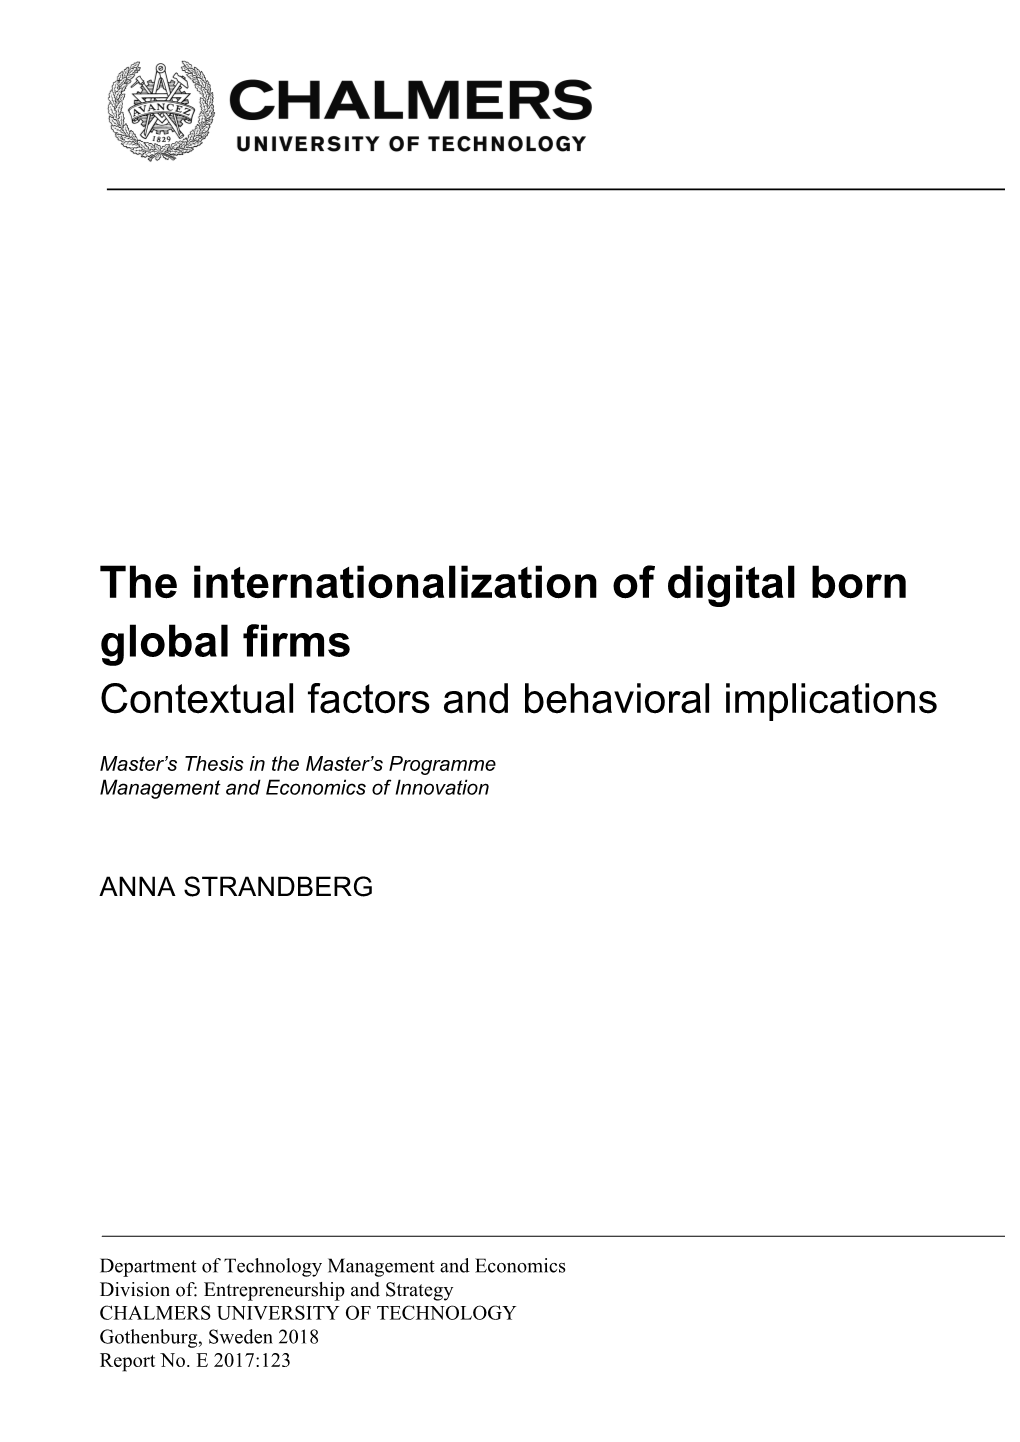 The Internationalization of Digital Born Global Firms